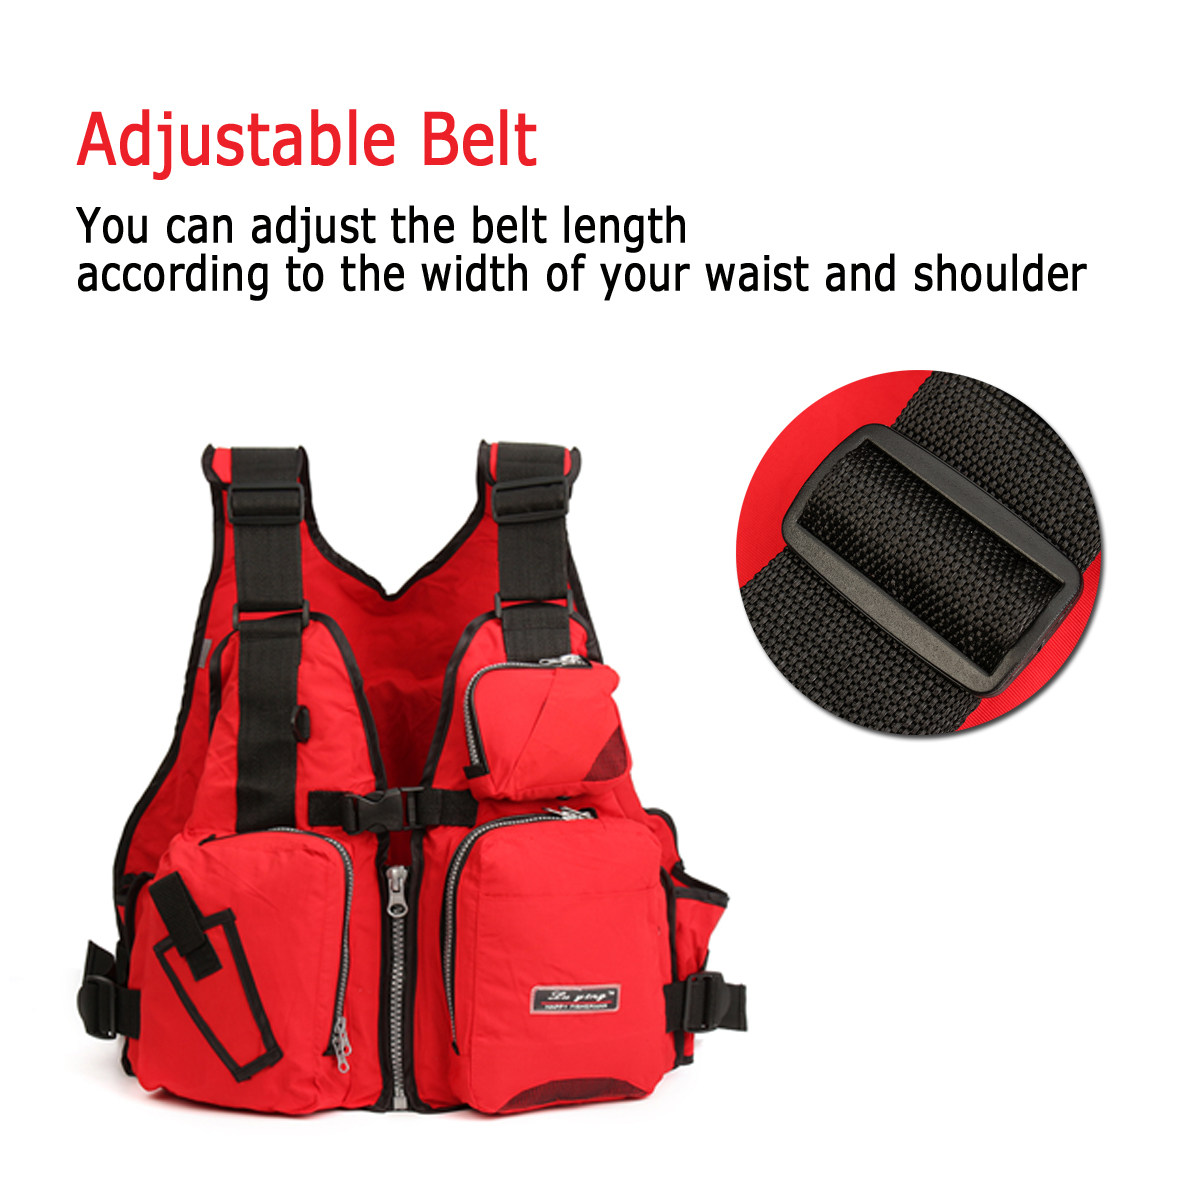 Outdoor Life Jackets for Adult kayaking, Multi-Pockets & Reflective Belt, Adjustable Life Vests for Adults, Safe Aid Jacket, Buoyancy Waistcoat, Swim Vest for Canoe Dinghy, Sailing - image 4 of 8